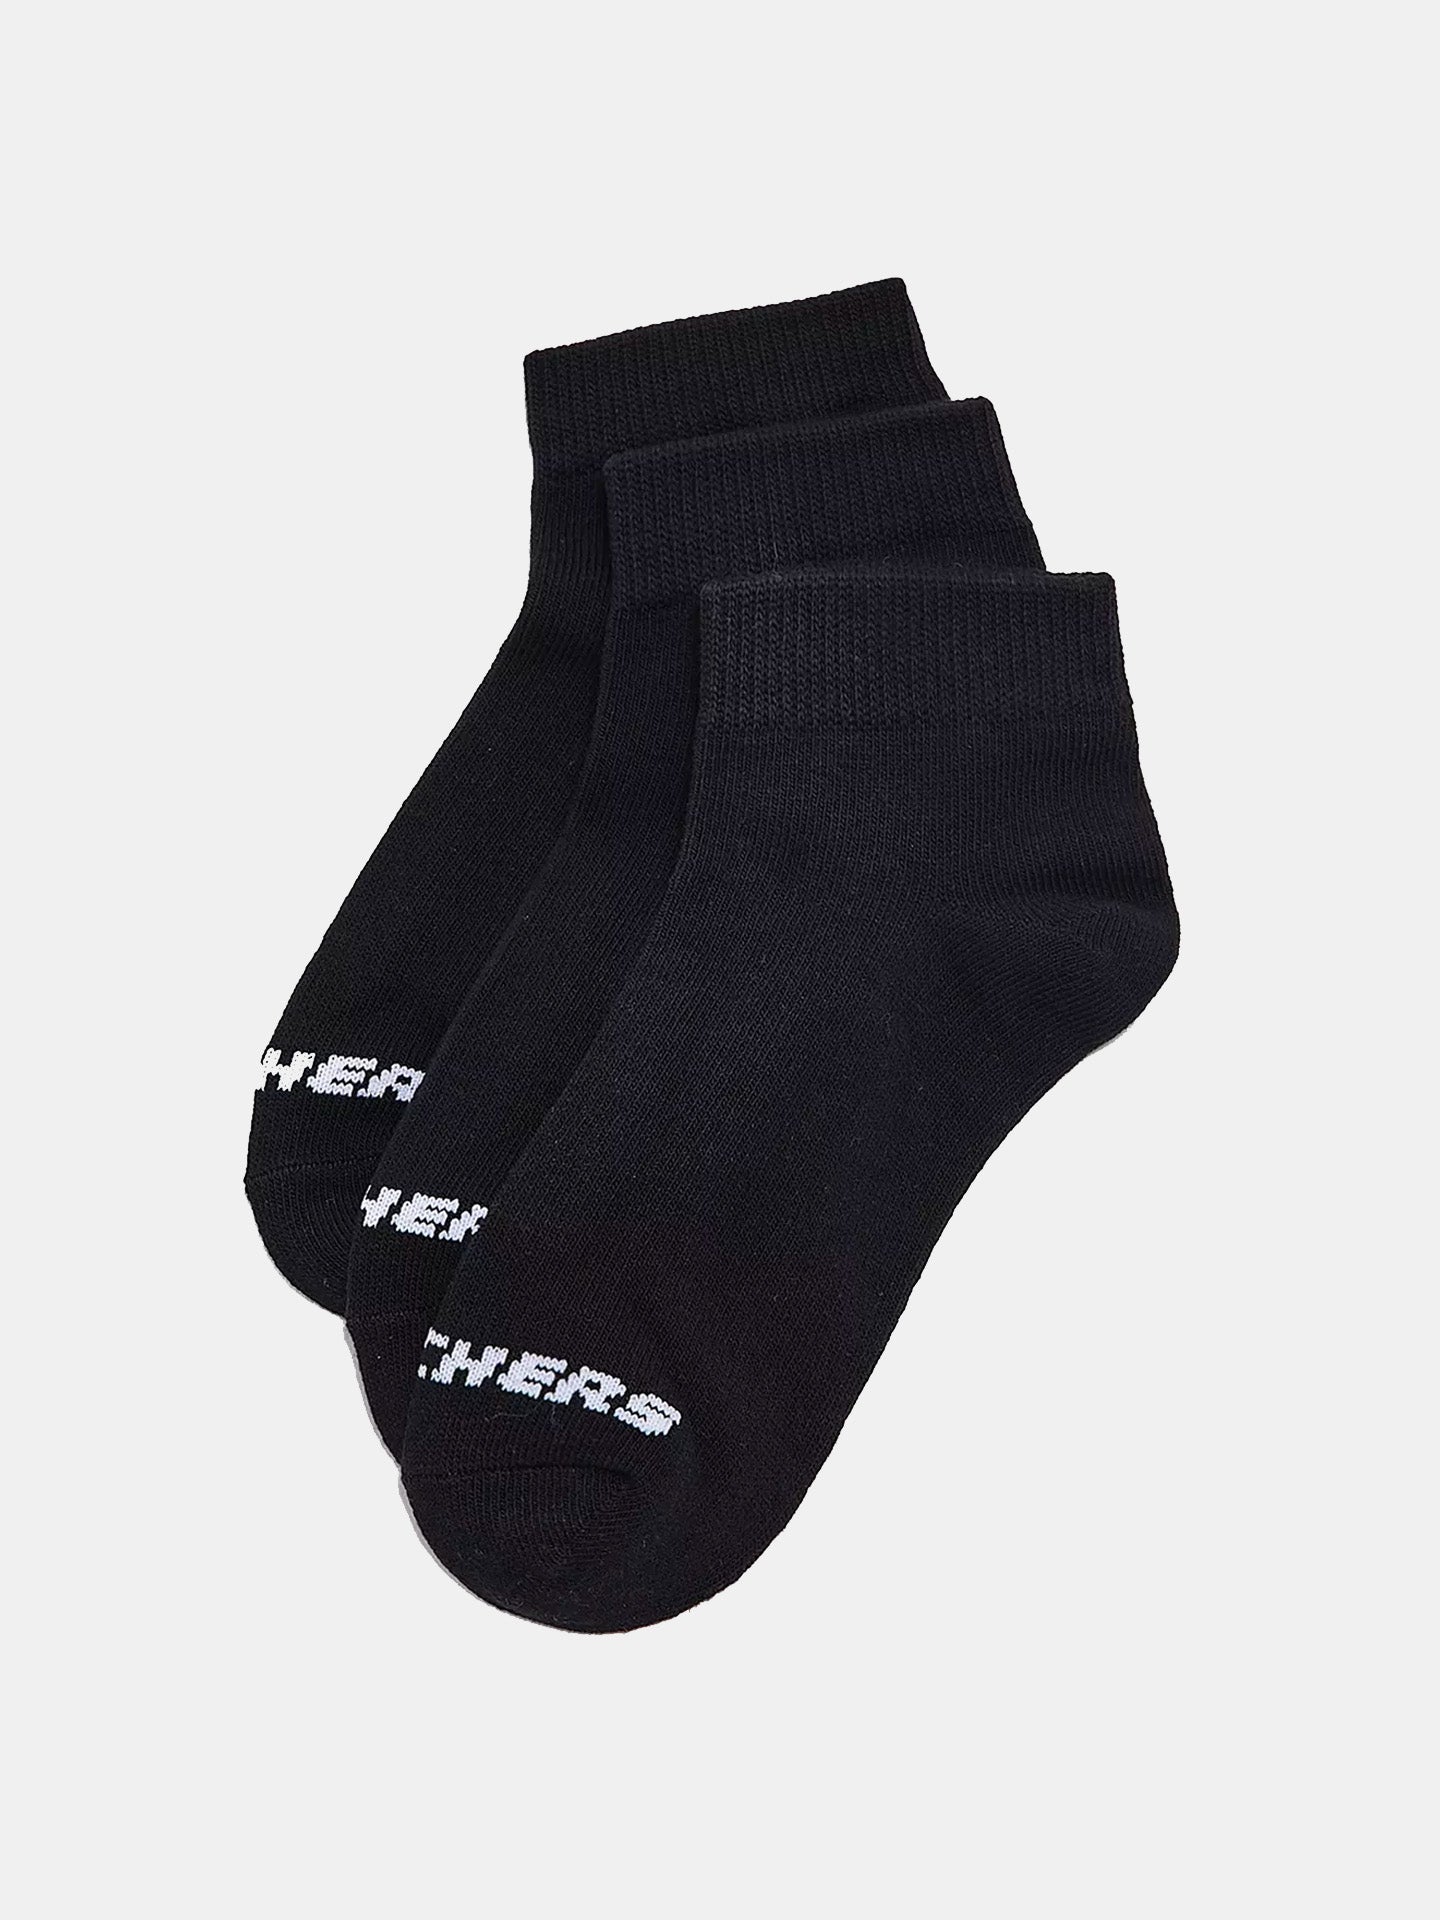 Skechers Kids 3Pk Unisex Non Terry Qtr Crew - Flat Knit Ankle Socks